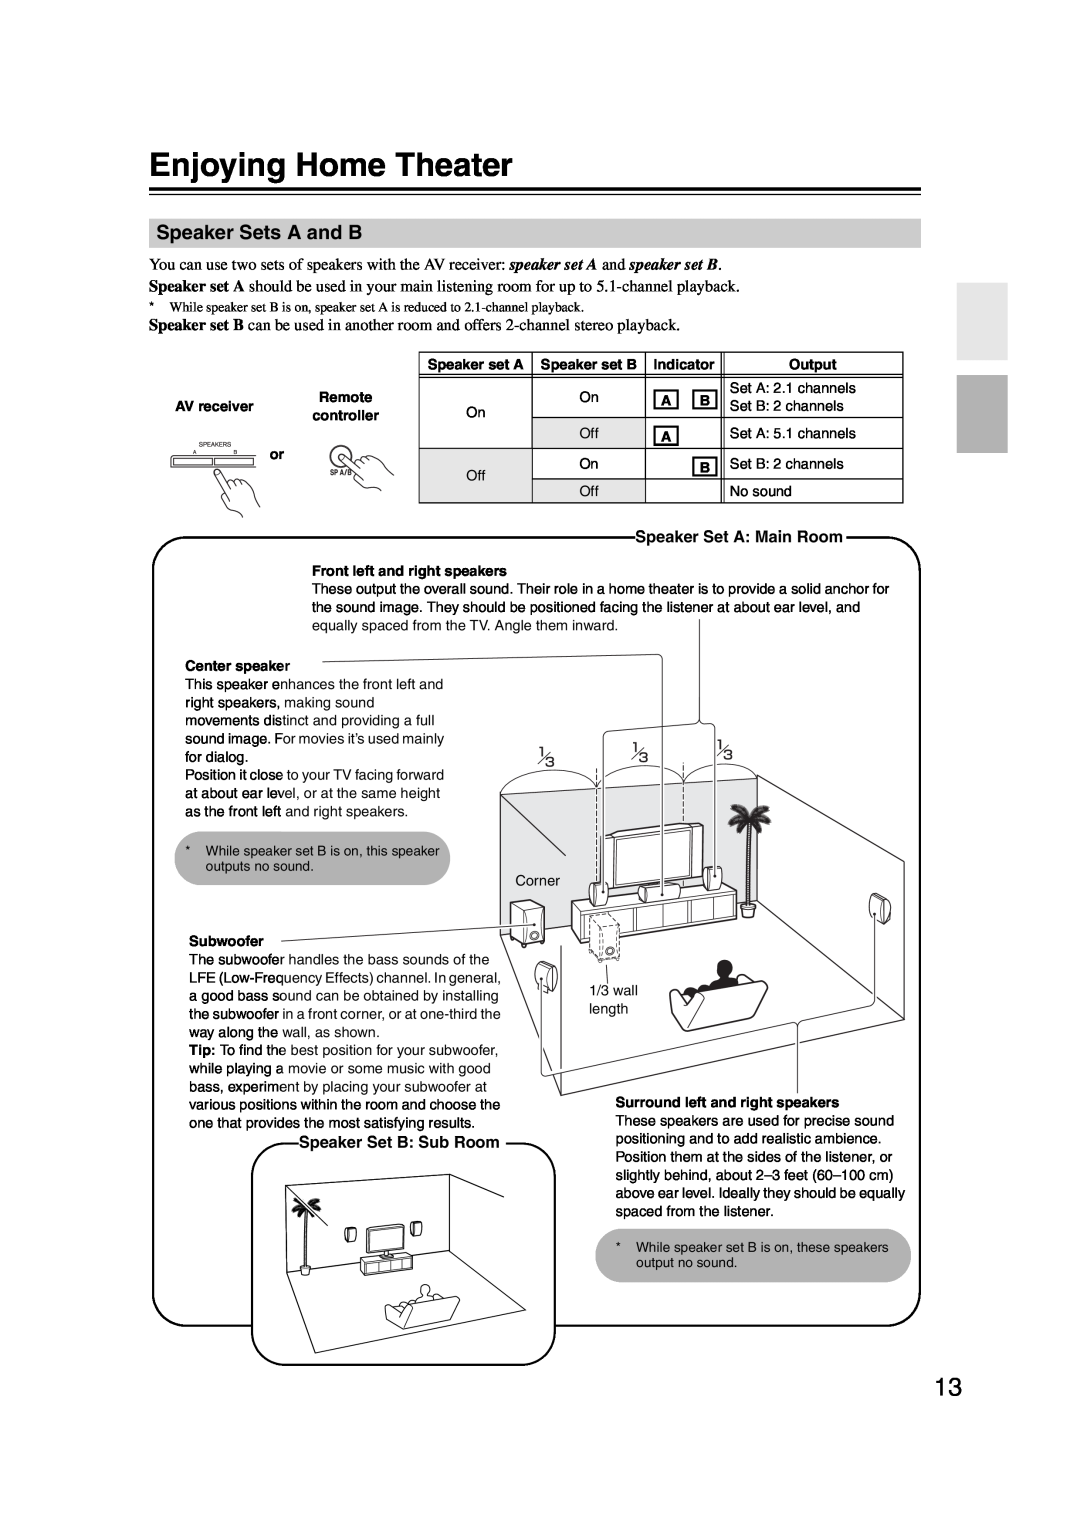 Onkyo TXSR307 instruction manual Enjoying Home Theater, Speaker Sets A and B 